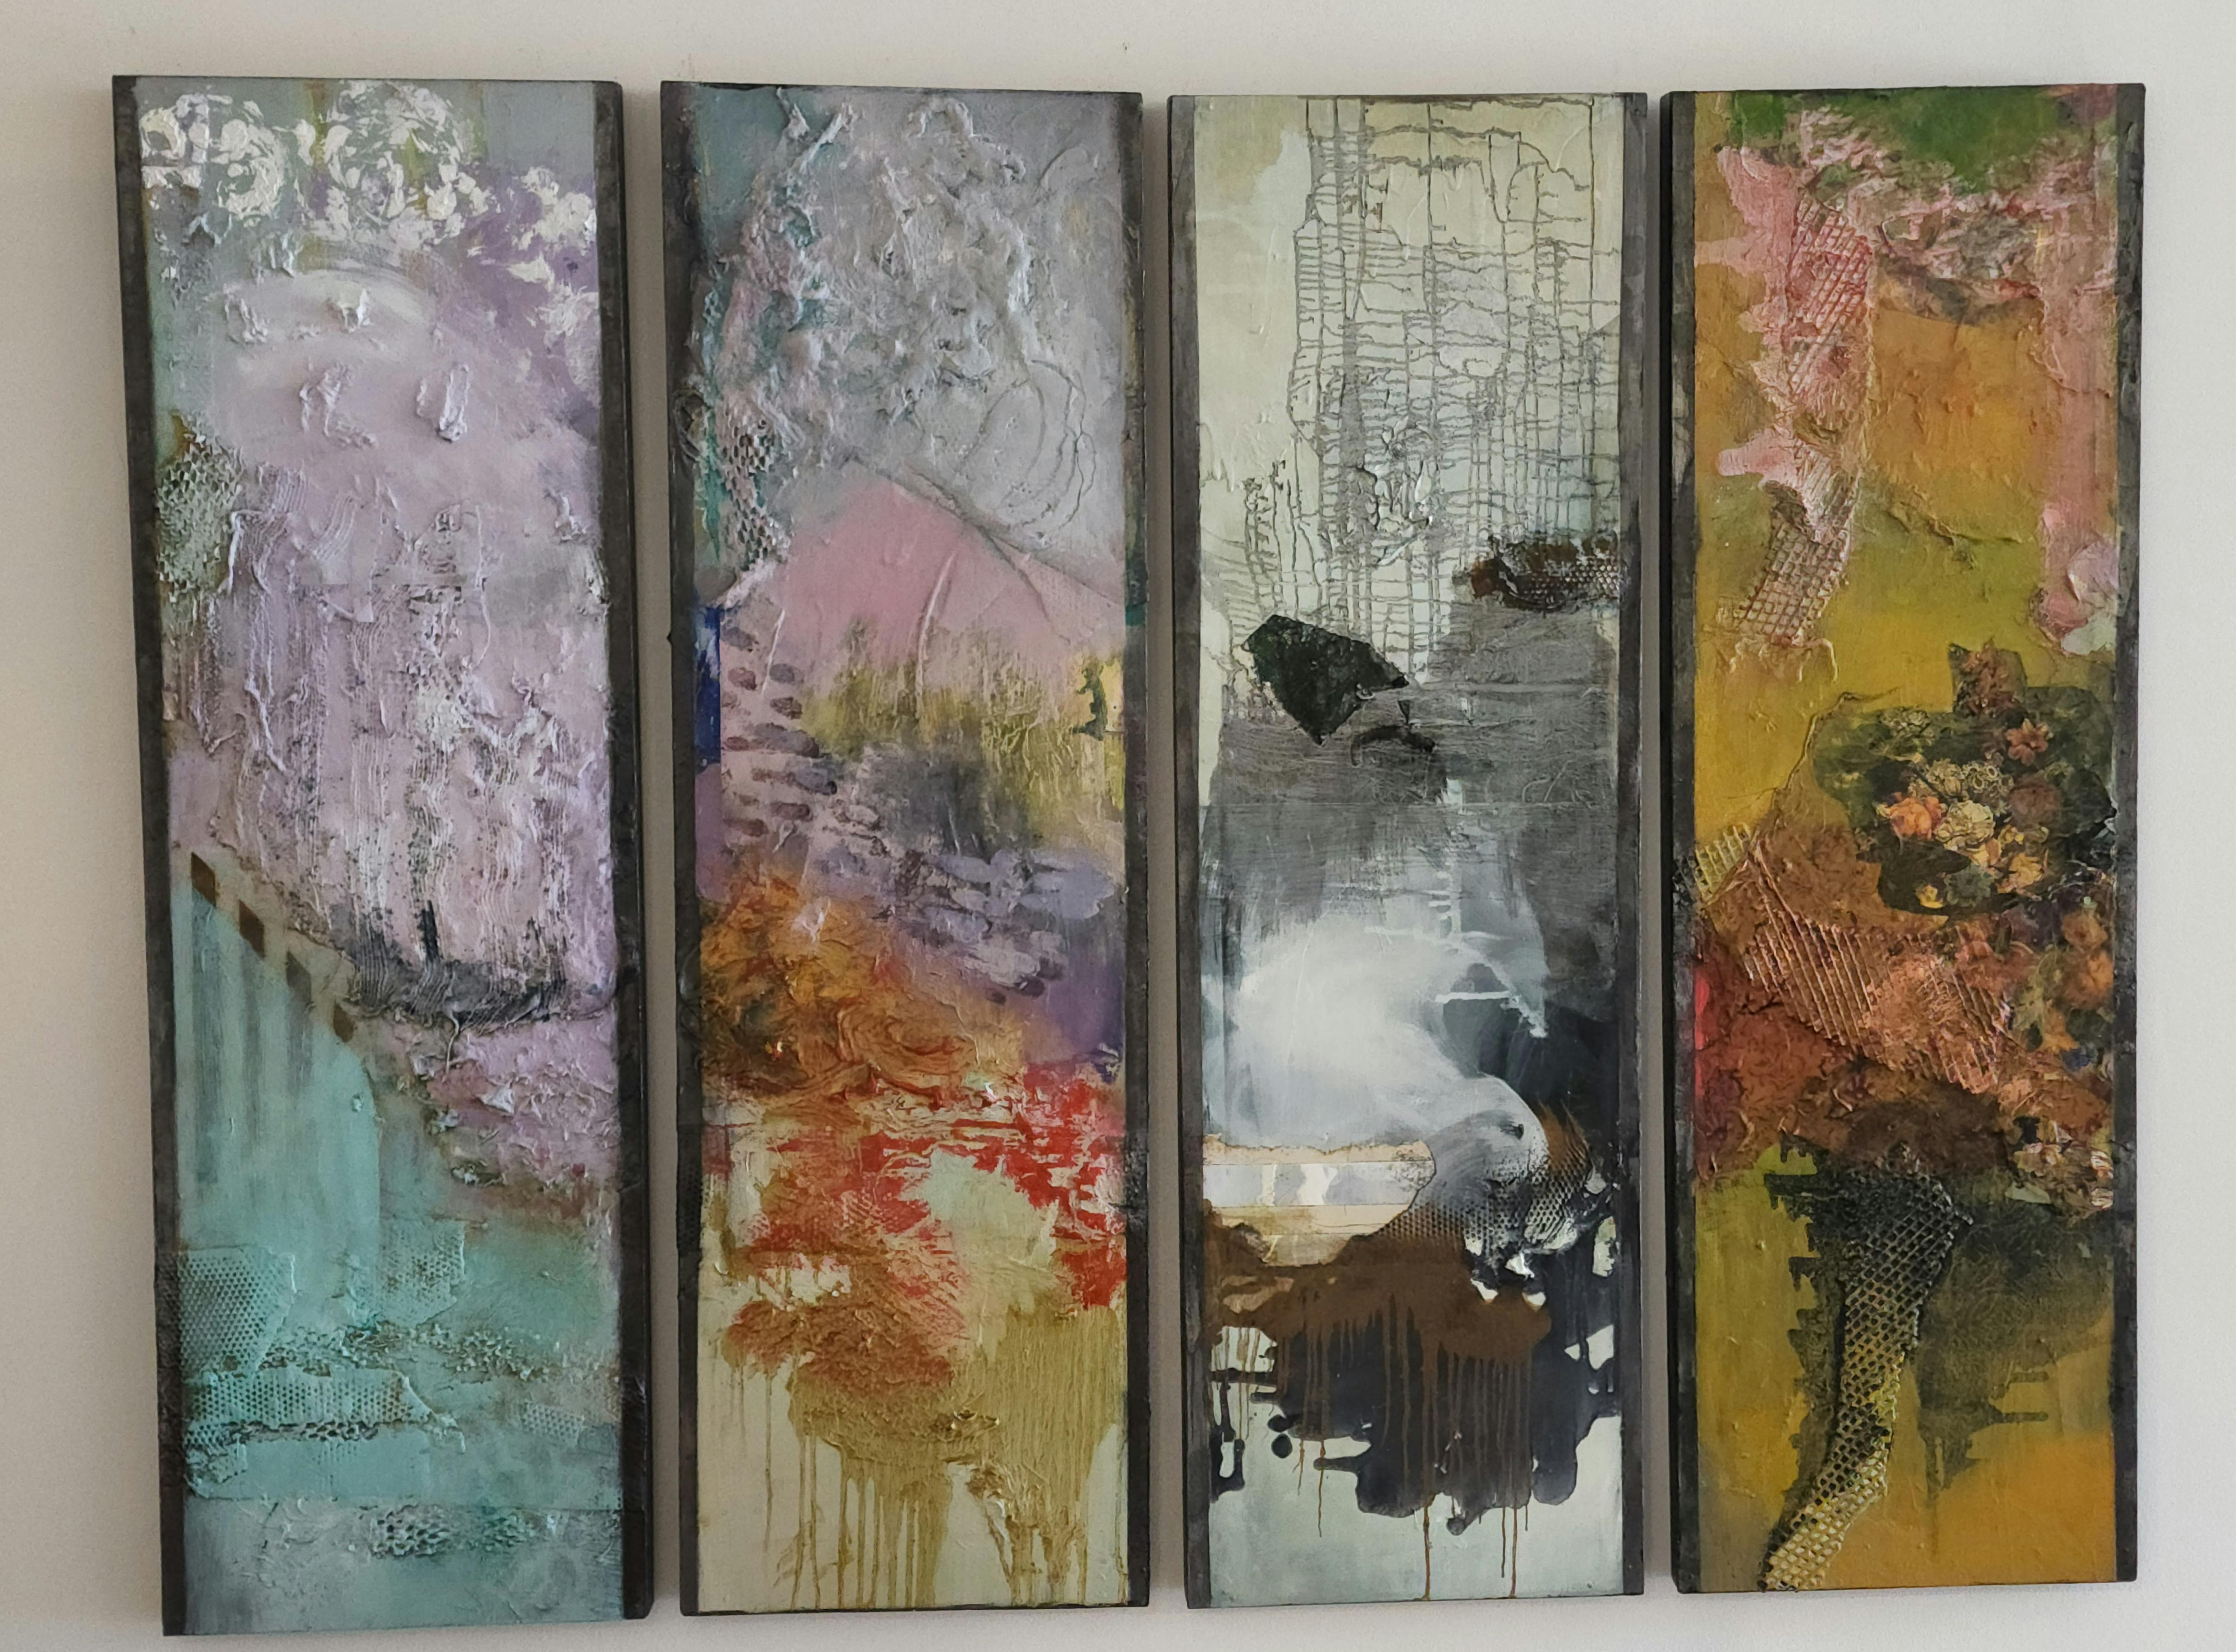 The Four Seasons, Mixed Media, Four Panels each 48 x 15, Abstract  Expressionism - Abstract Expressionist Mixed Media Art by Joan Bohn